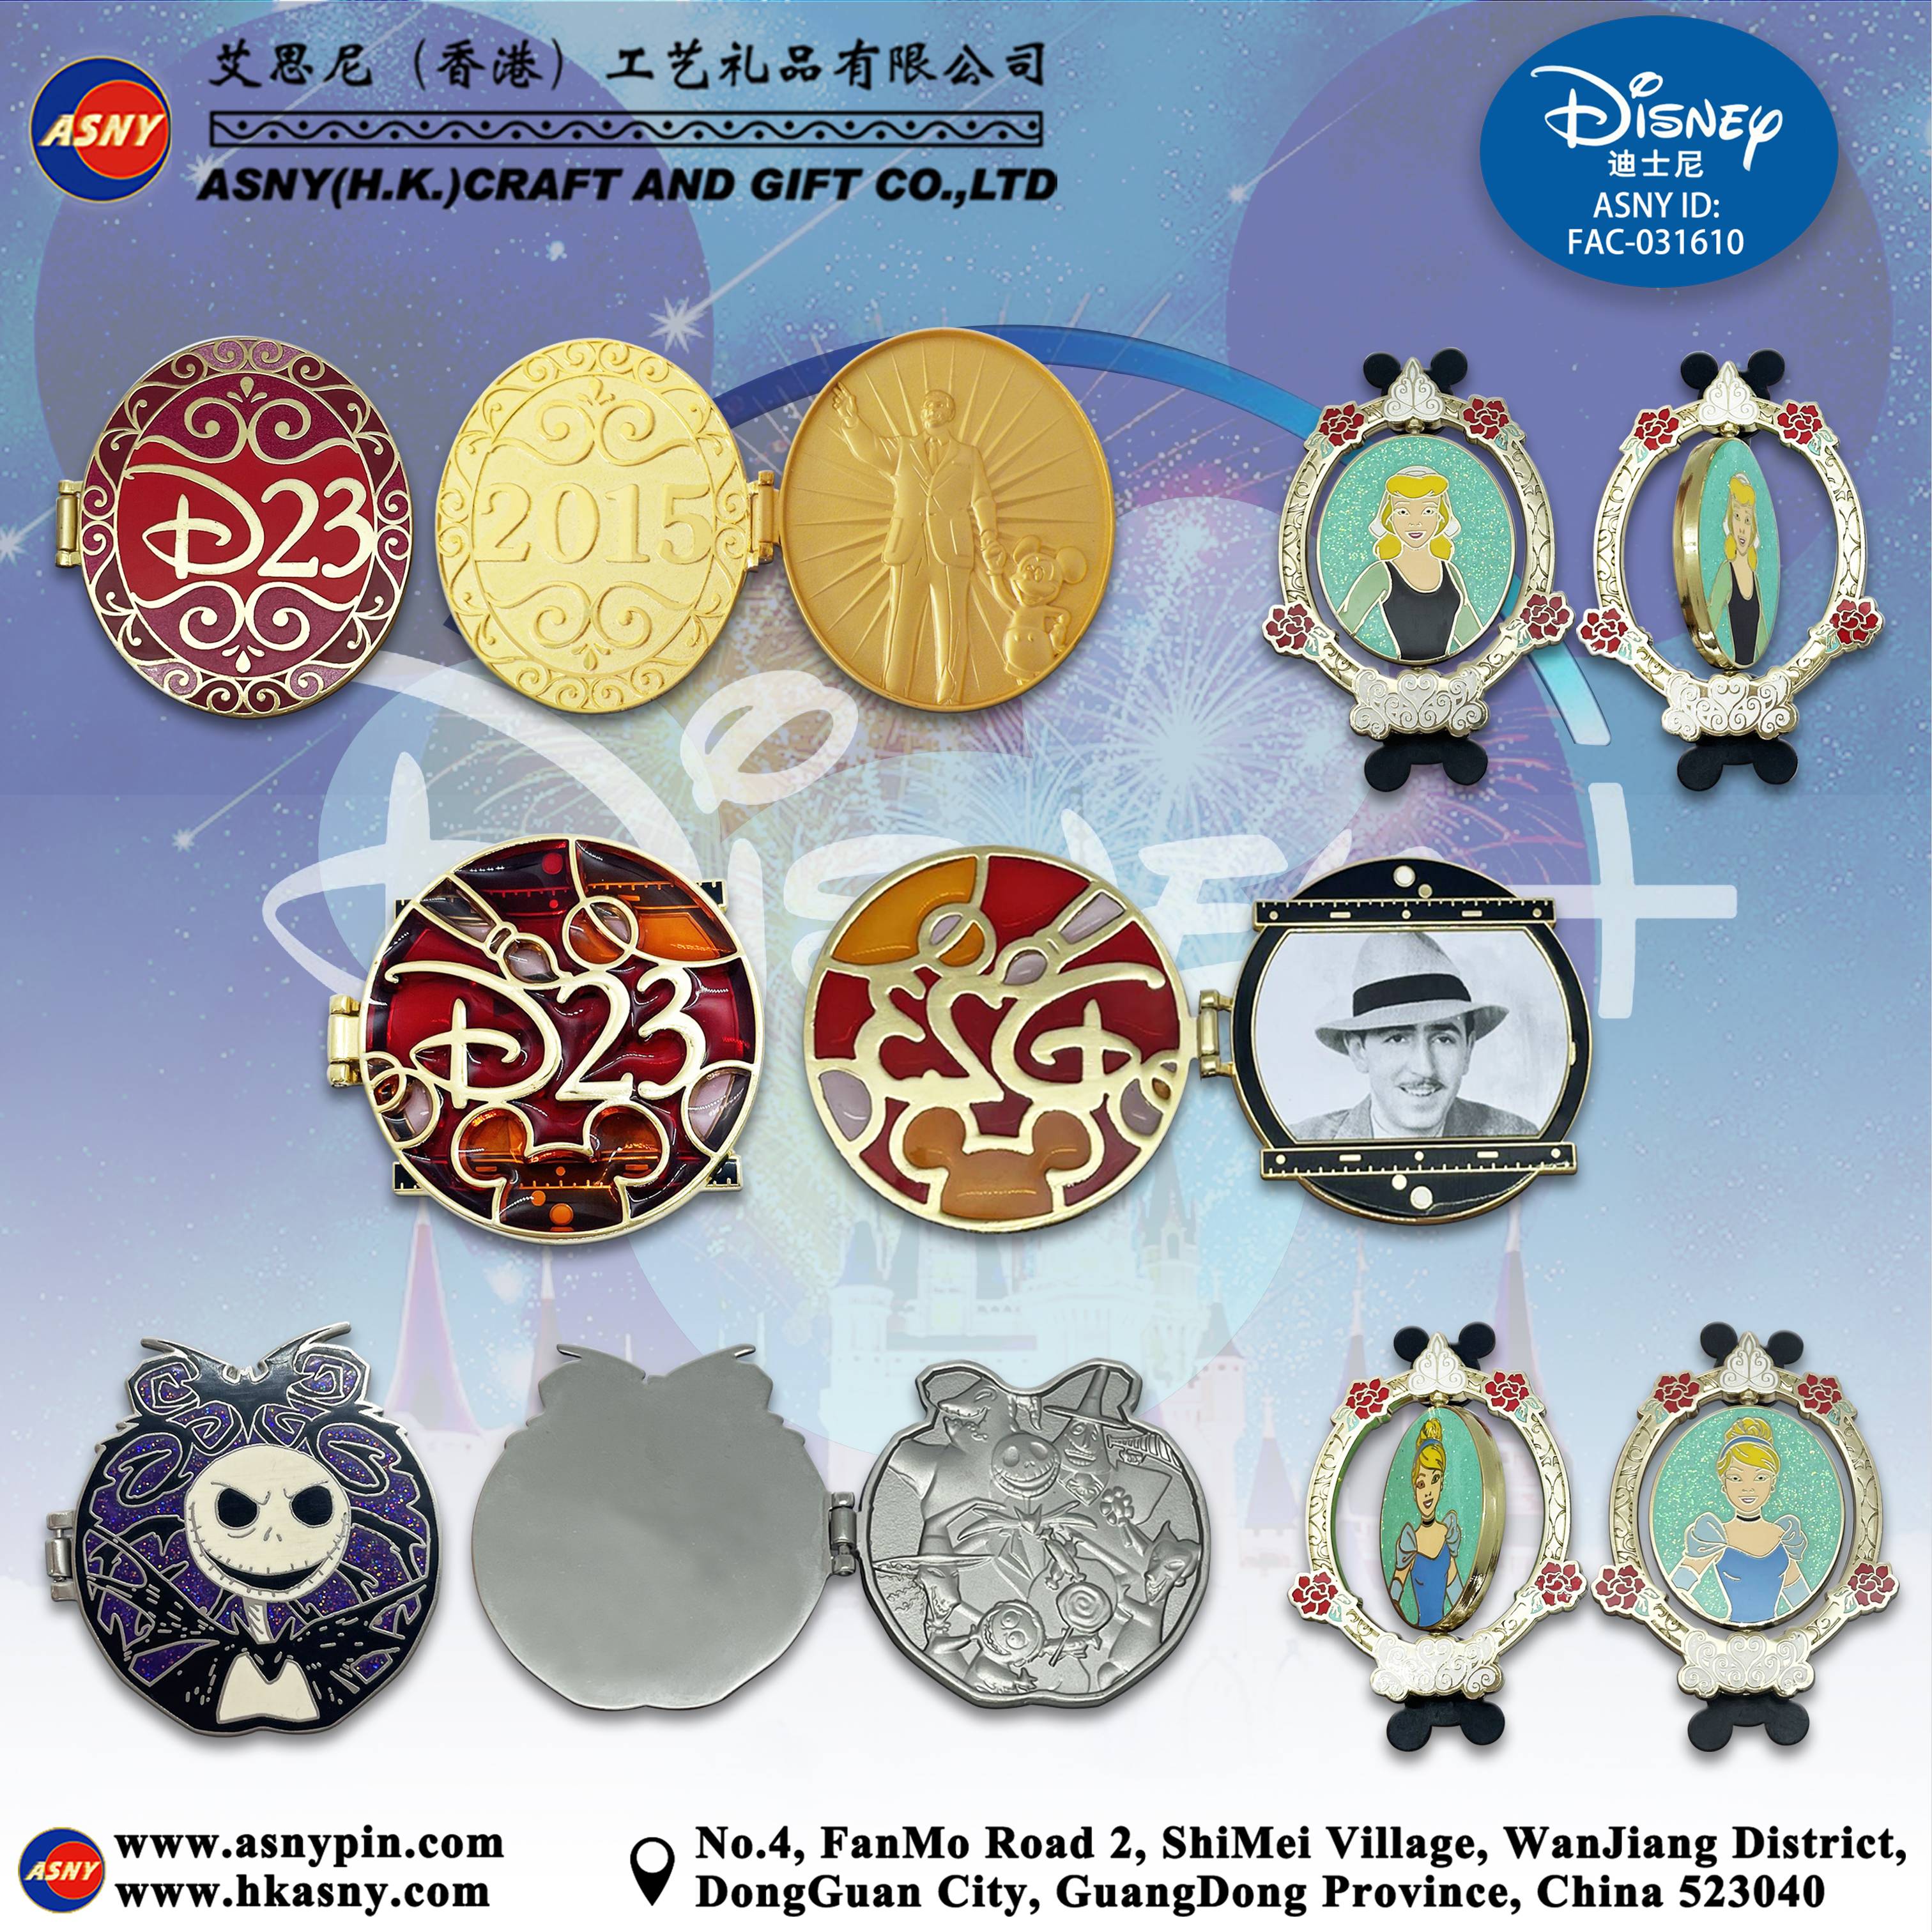 Catalog - Disney Badge & Pin - Souvenir/Craft/Promotional Item Price/Design/Customize/Production/Maker/Supply/Factory (1)